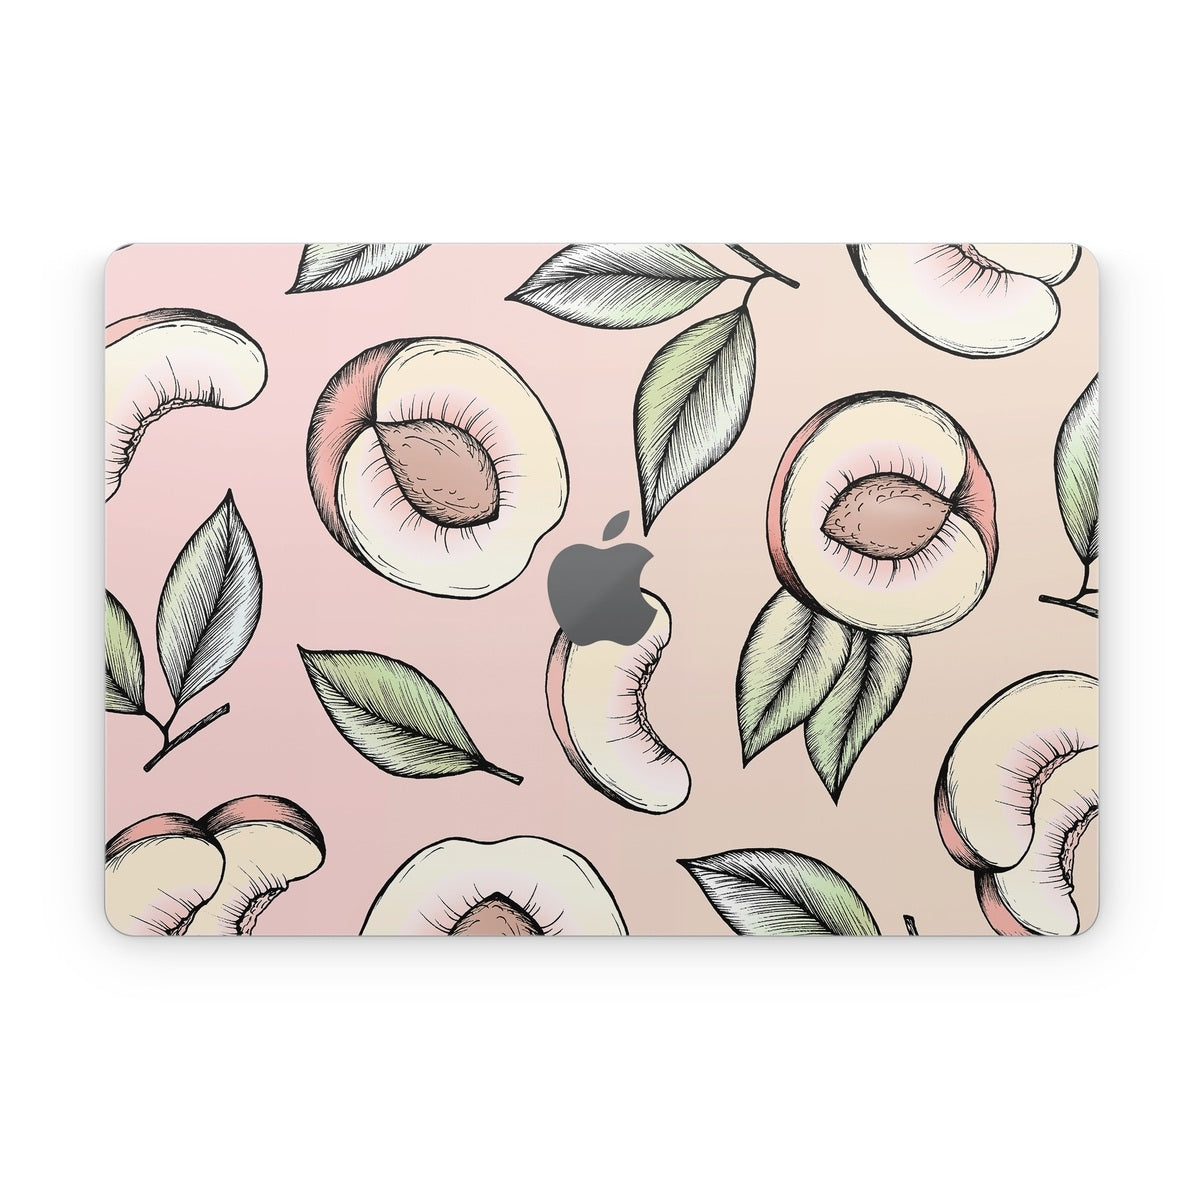 Peach Please - Apple MacBook Skin